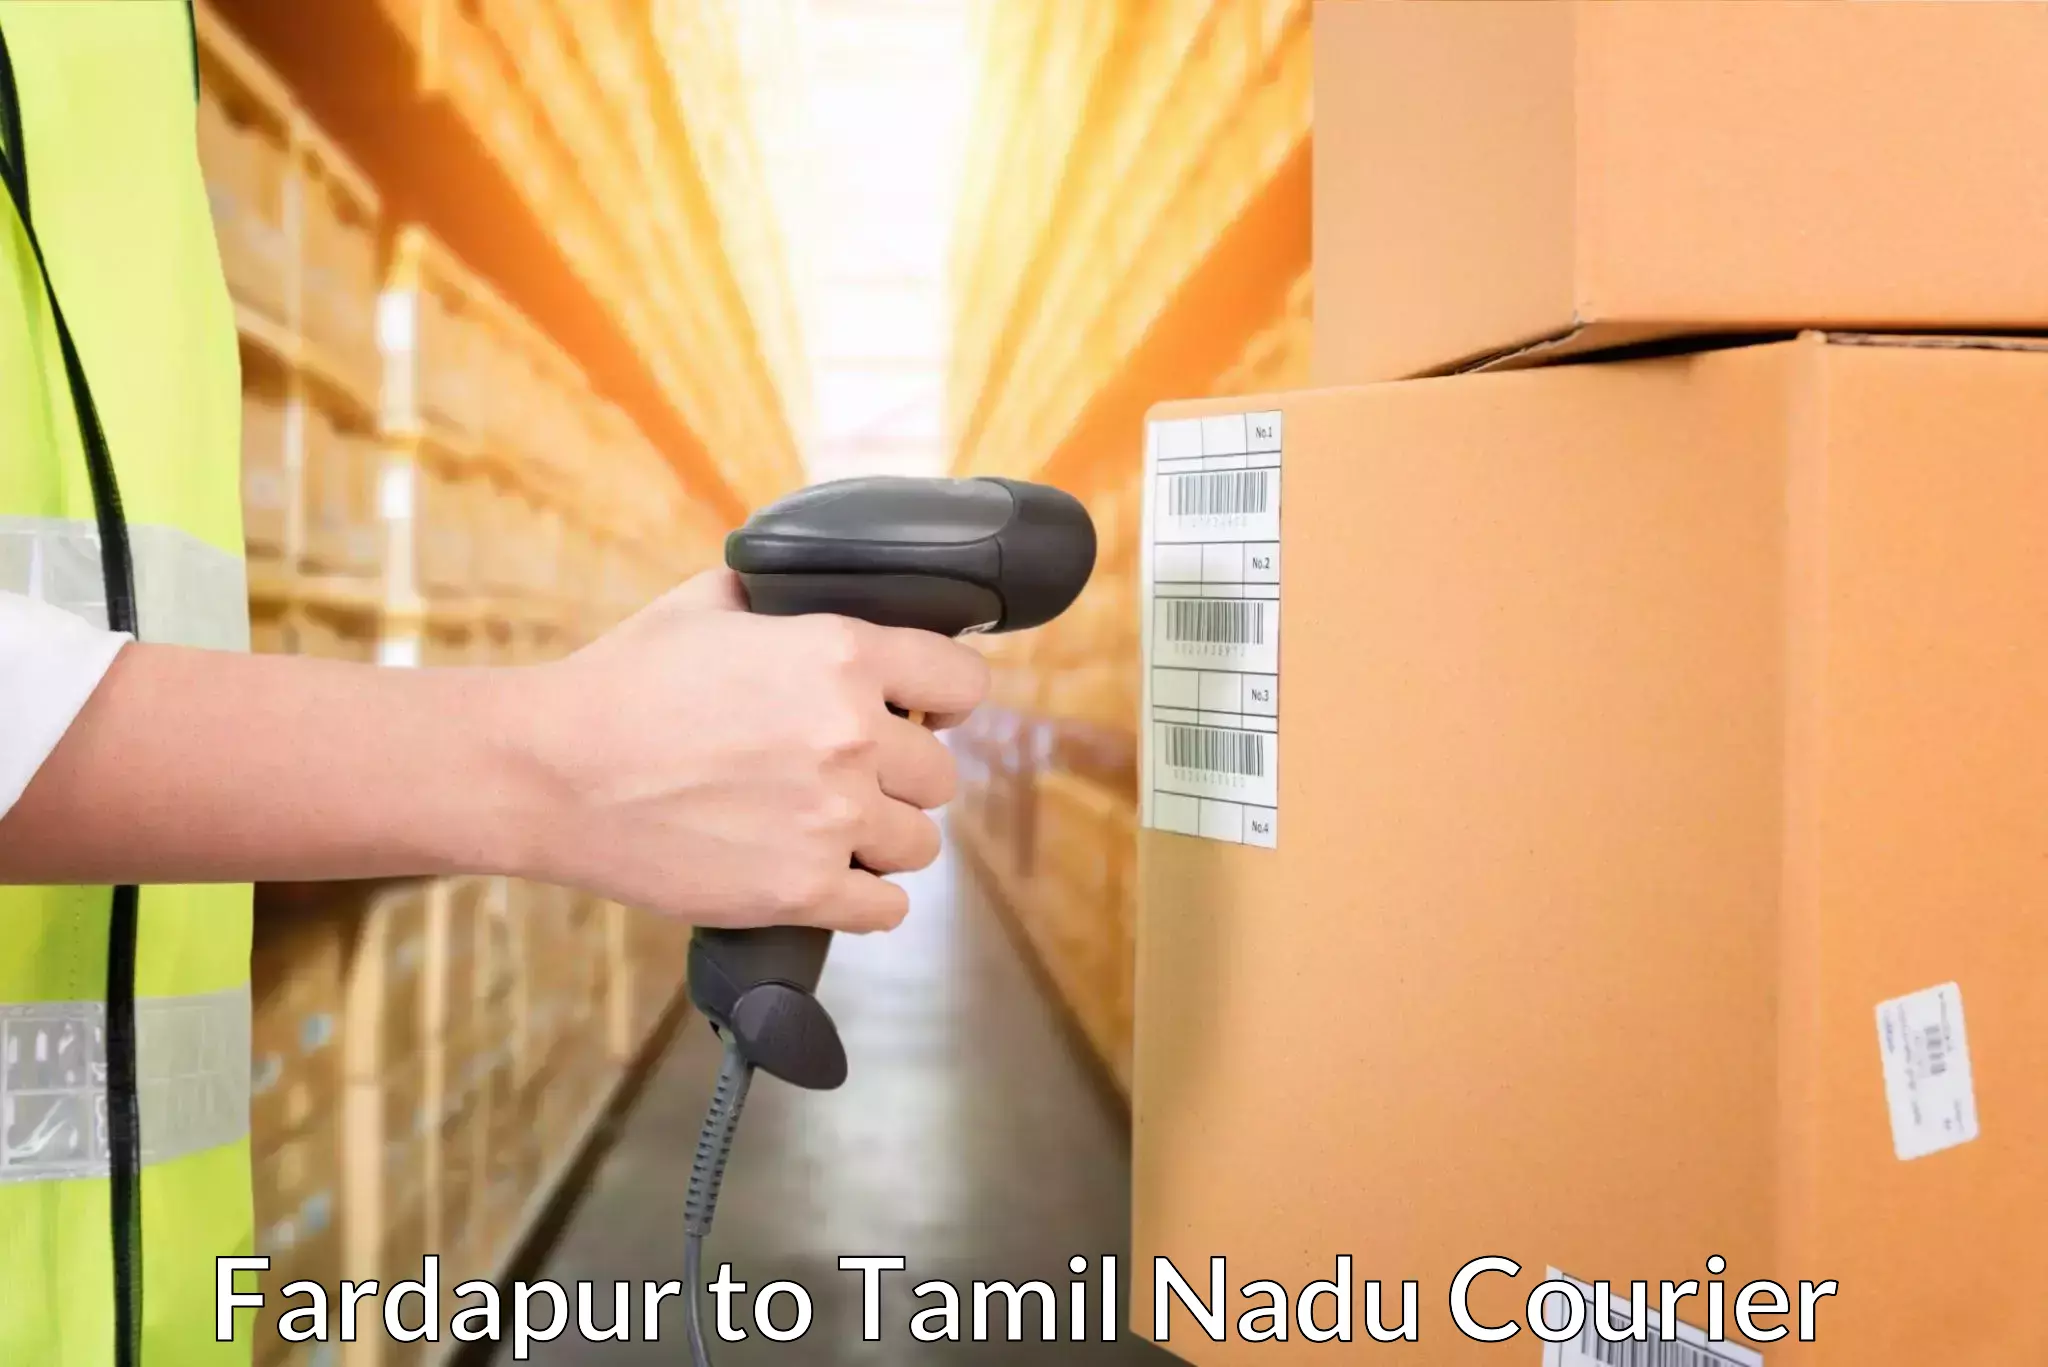 Seamless shipping experience Fardapur to Tamil Nadu